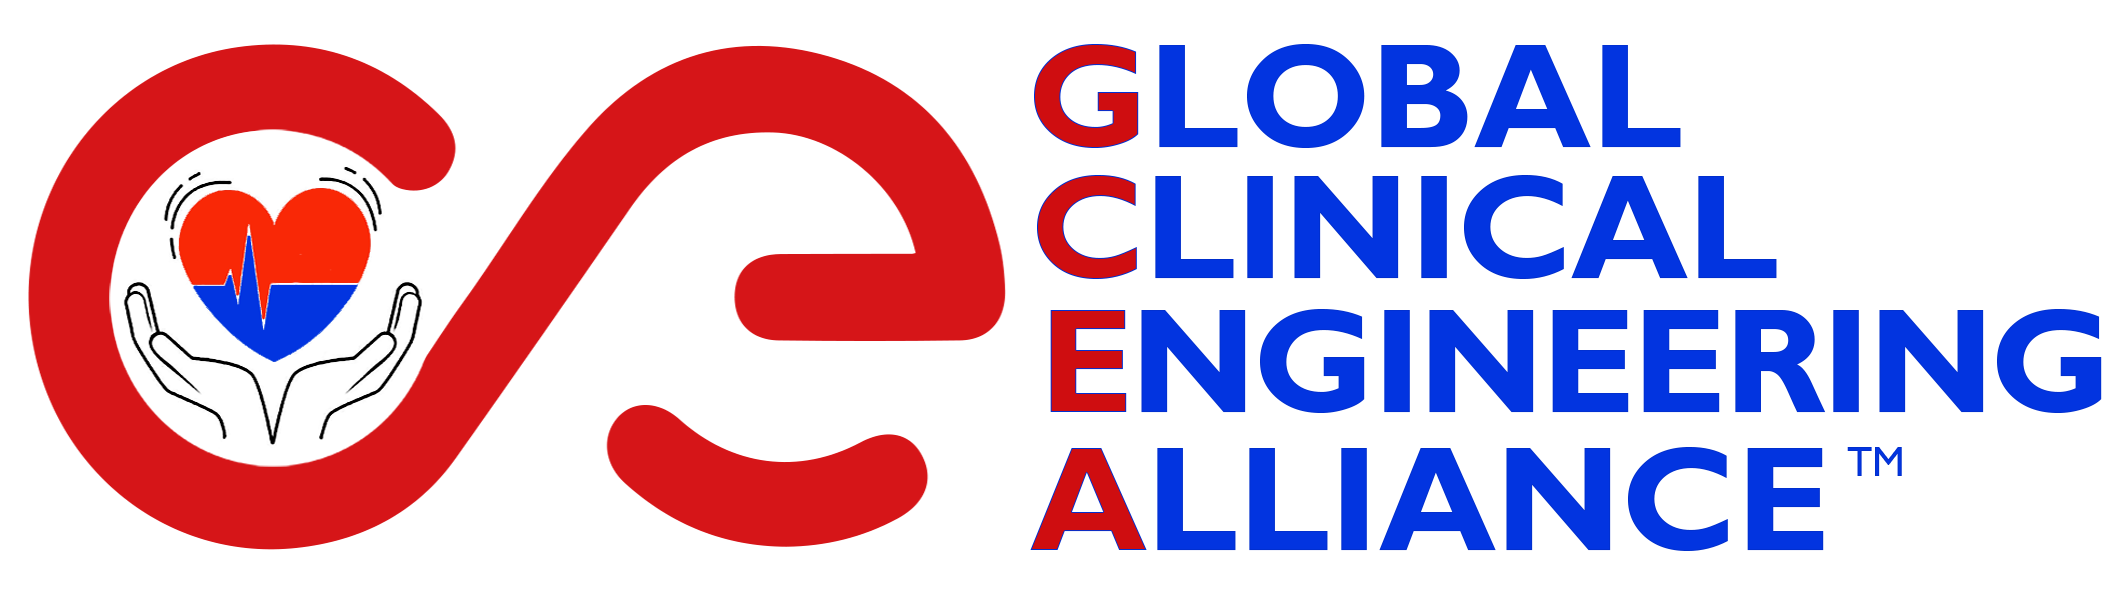 Global CE Alliance logov7-2